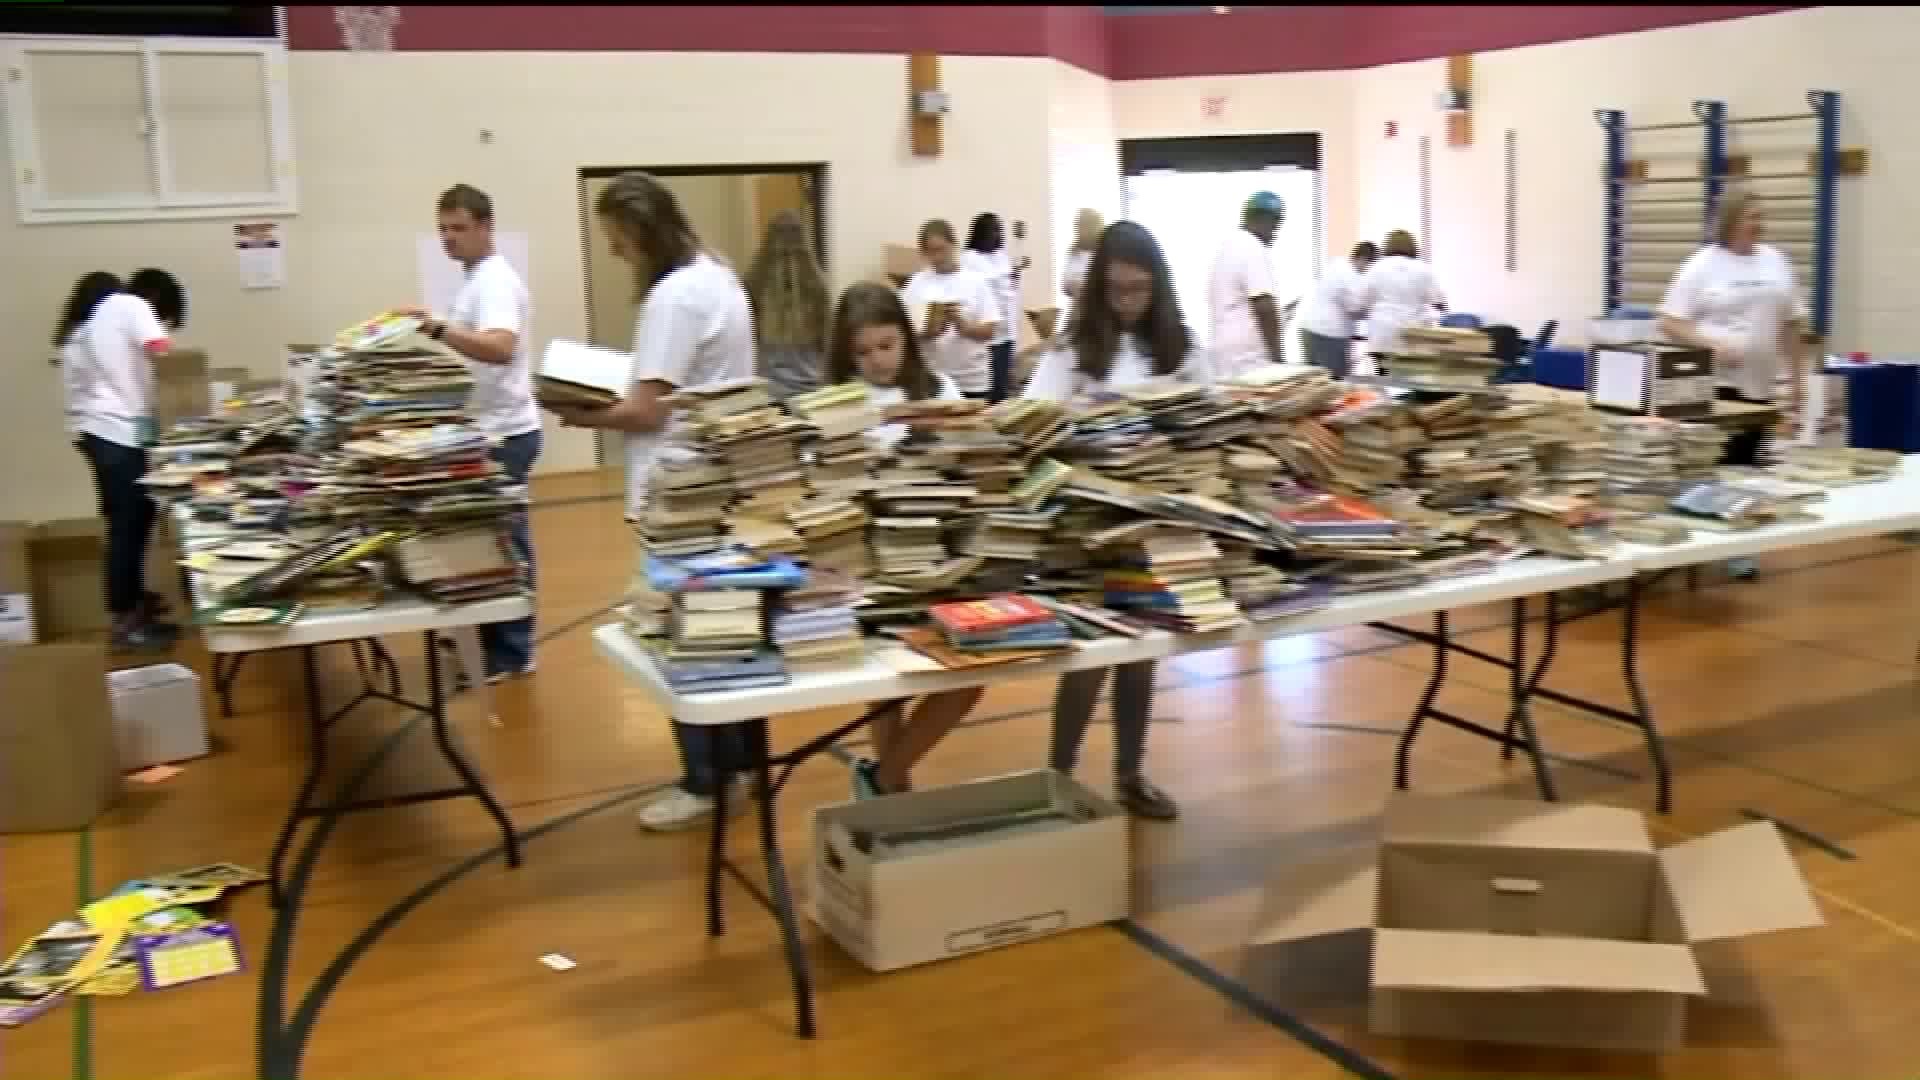 Thousands of Books Sorted for Summer Program